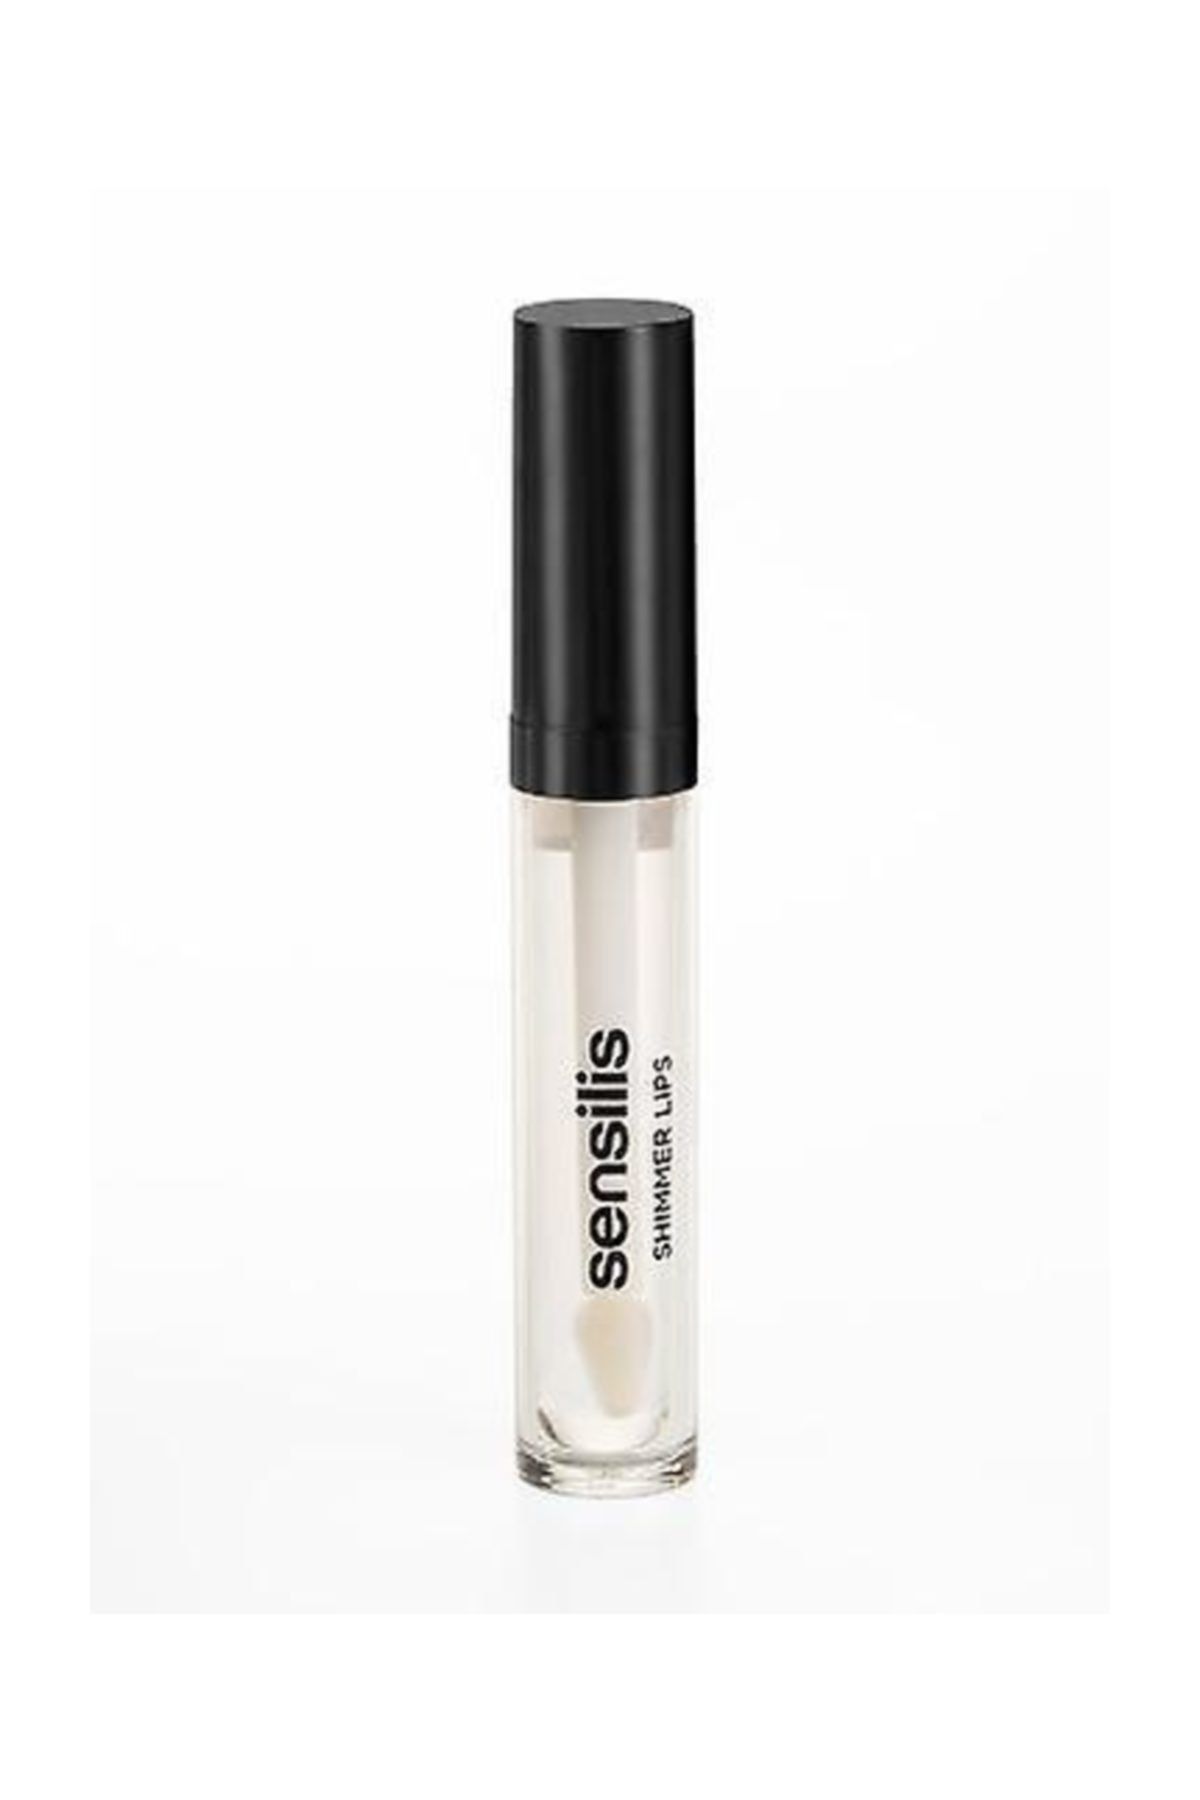 sensilis Ruj - Shimmer Lips Comfort Lips Gloss01 Transparent 6.5 ml 8428749616306